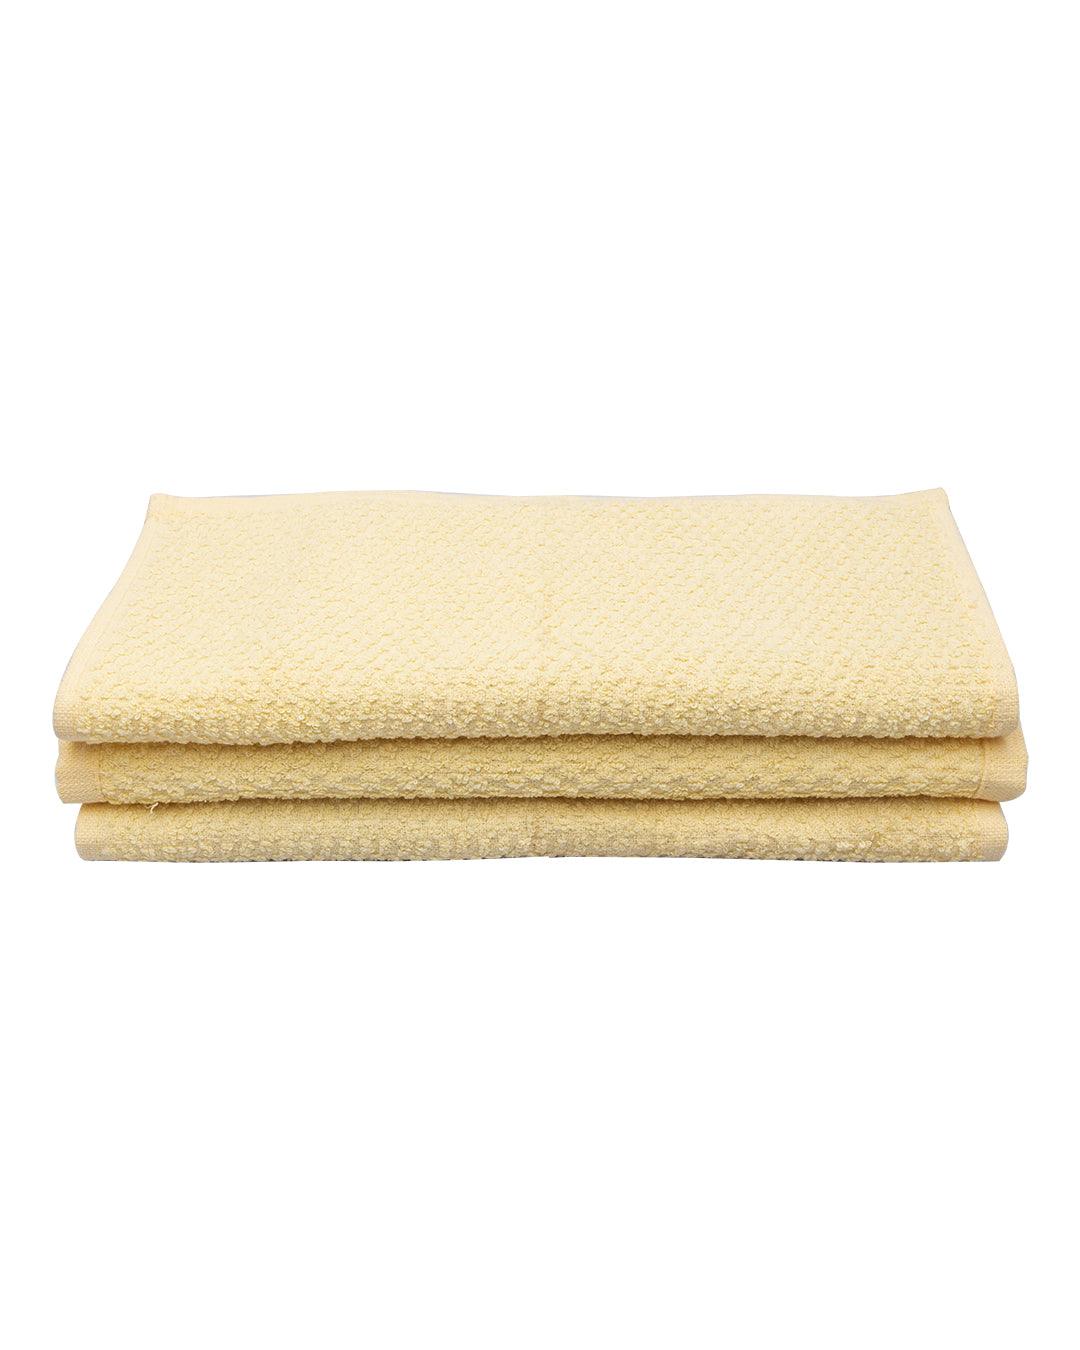 Market99 Face Towel, Rose, Yellow, Cotton, Set of 3 - MARKET 99